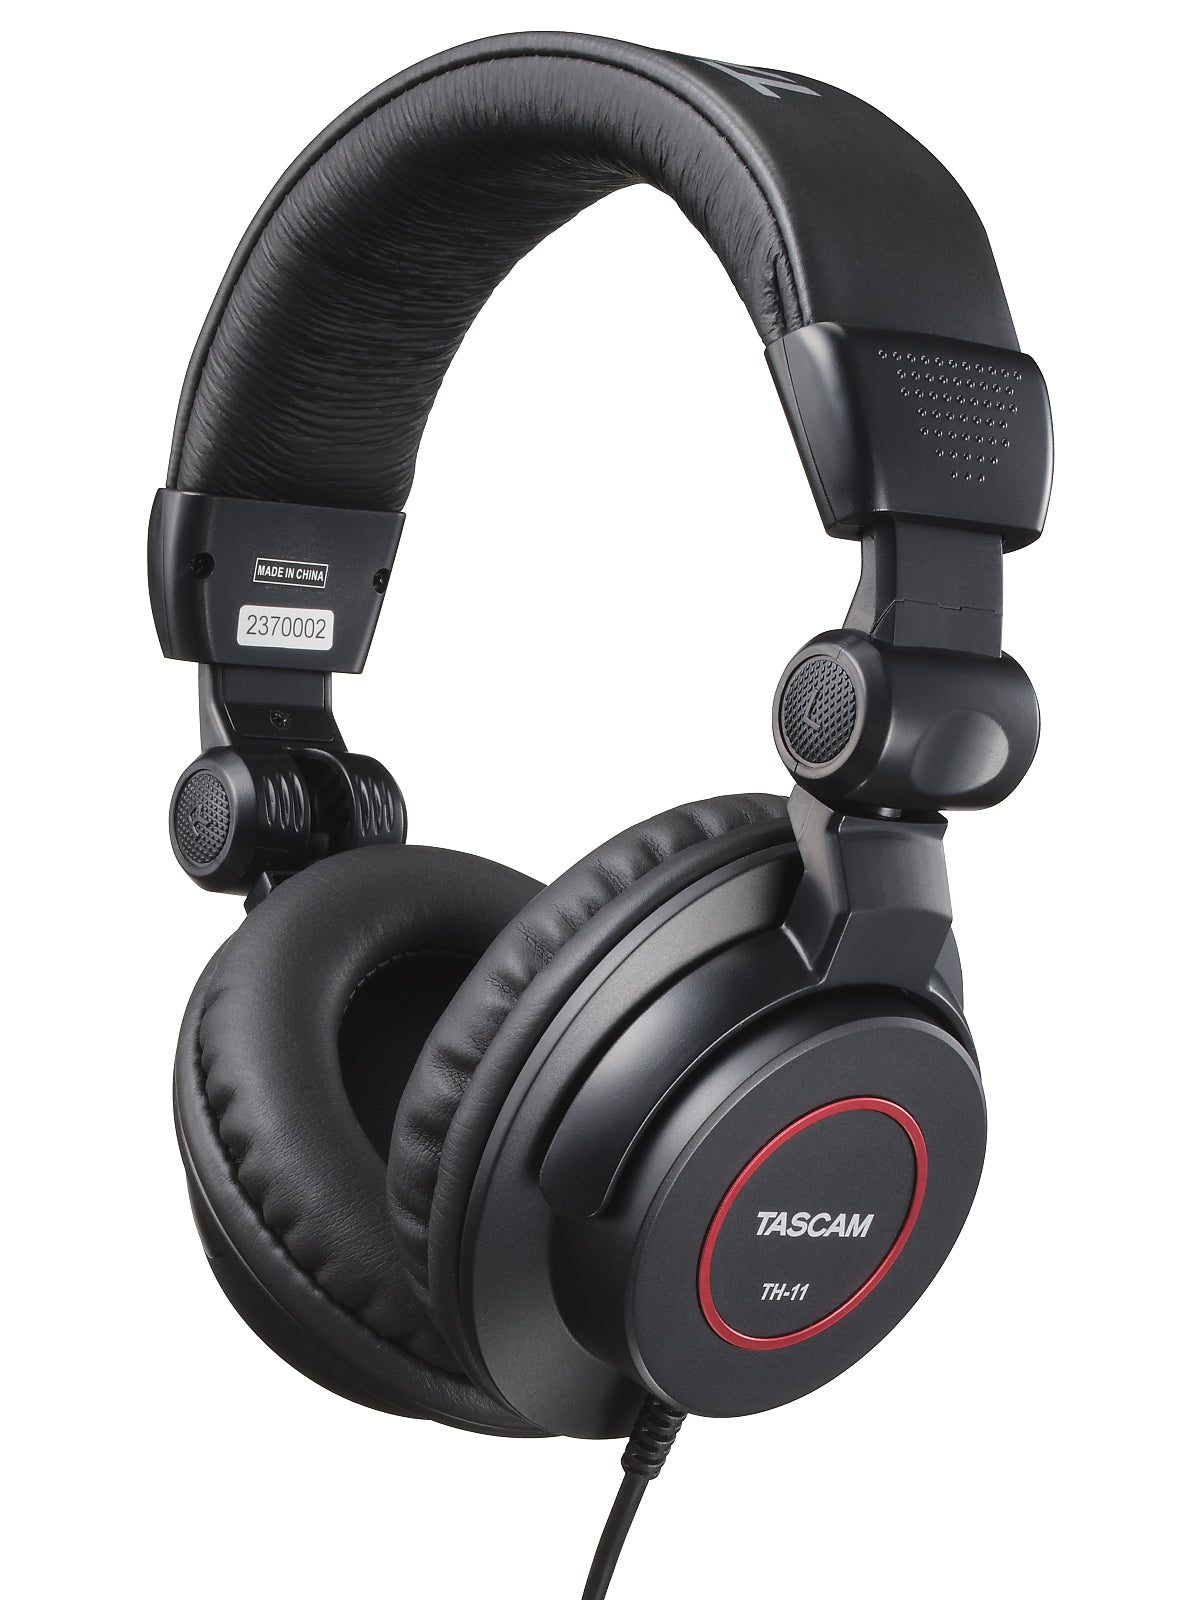 Tascam TH-11 Studio-Grade Headphones